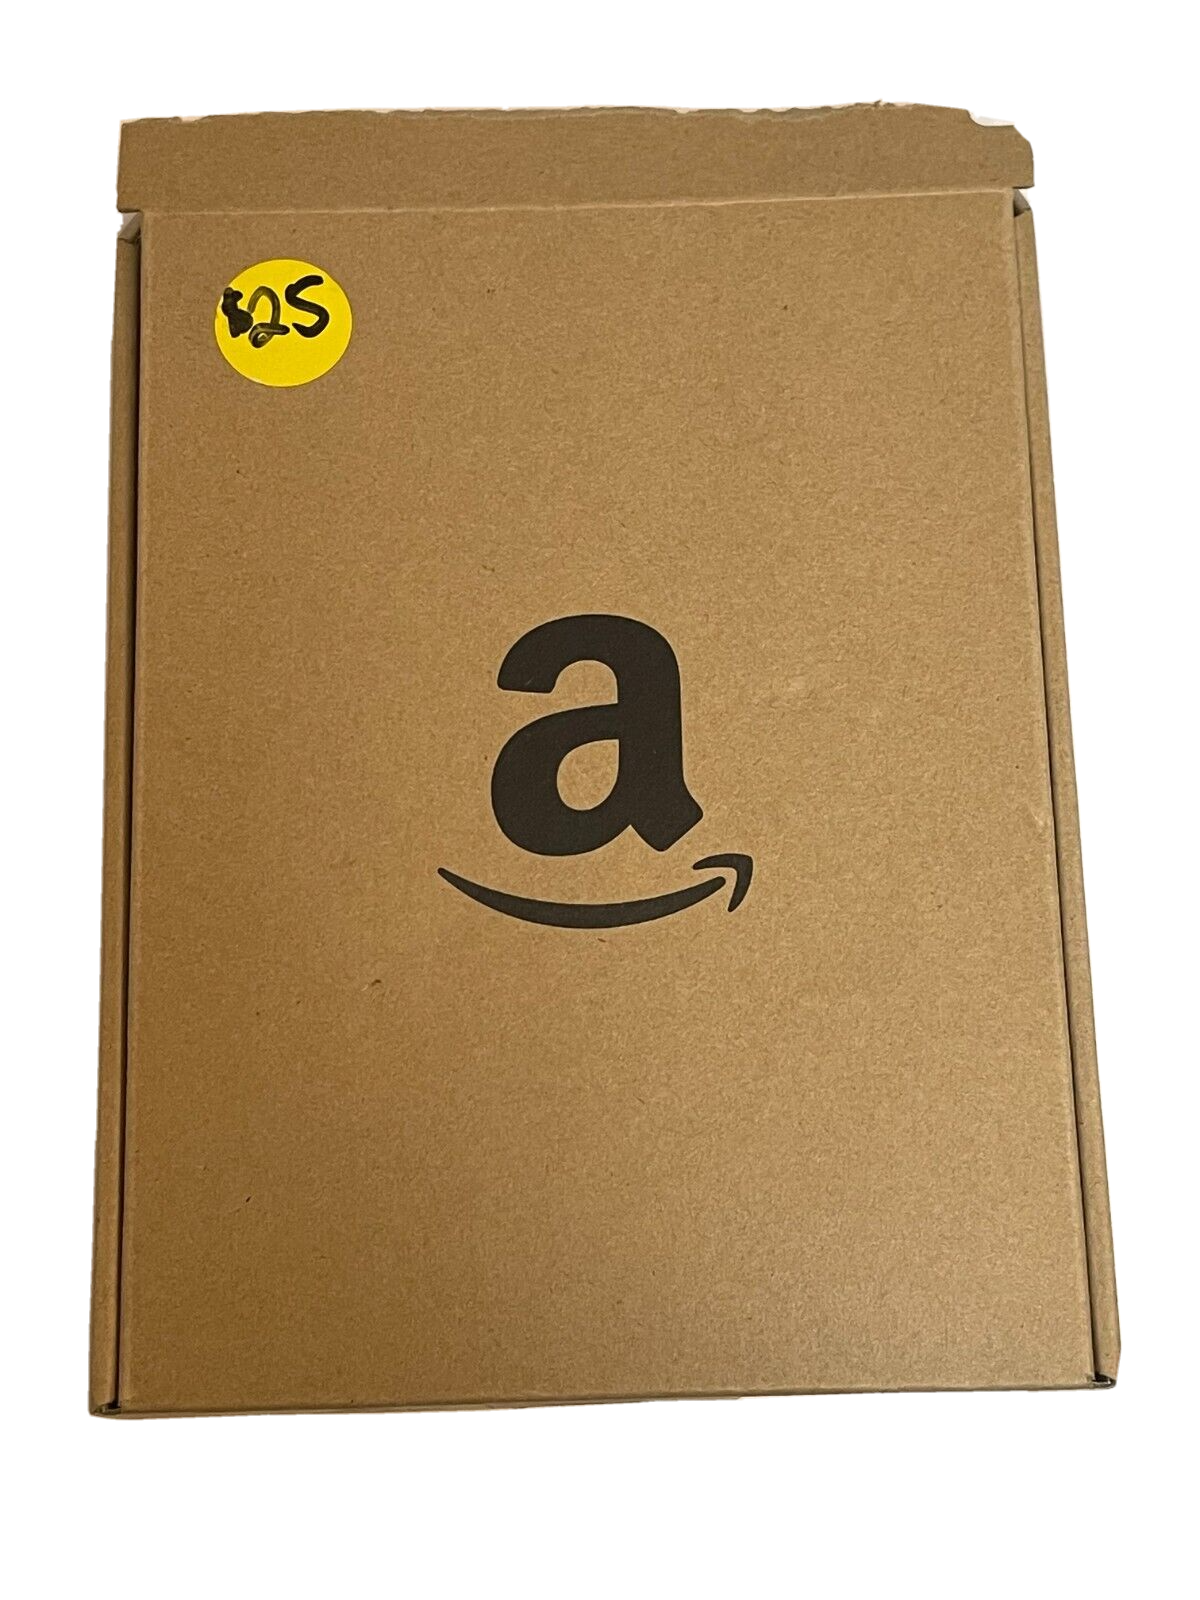 Amazon Kindle Touch (4th Generation) 4GB, Wi-Fi, 6in - Silver Amazon B005890G8O